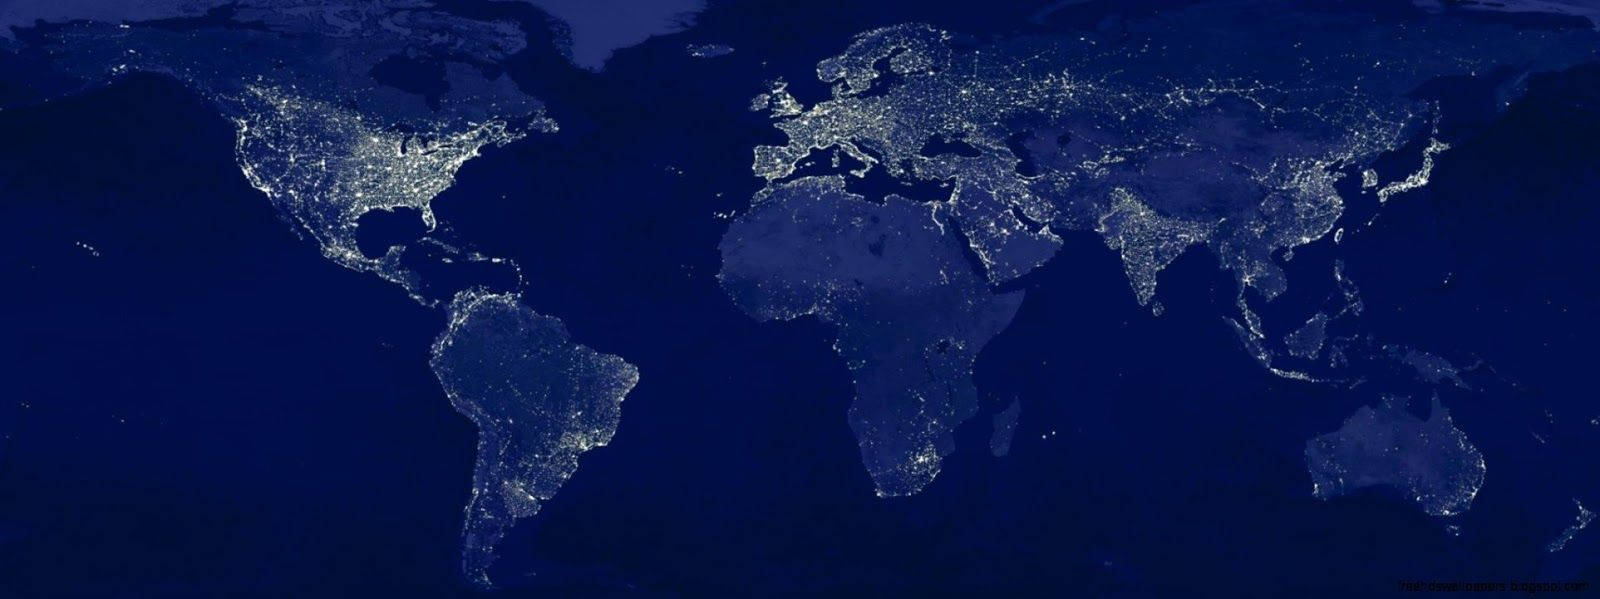 Nighttime World Map For Monitor Wallpaper